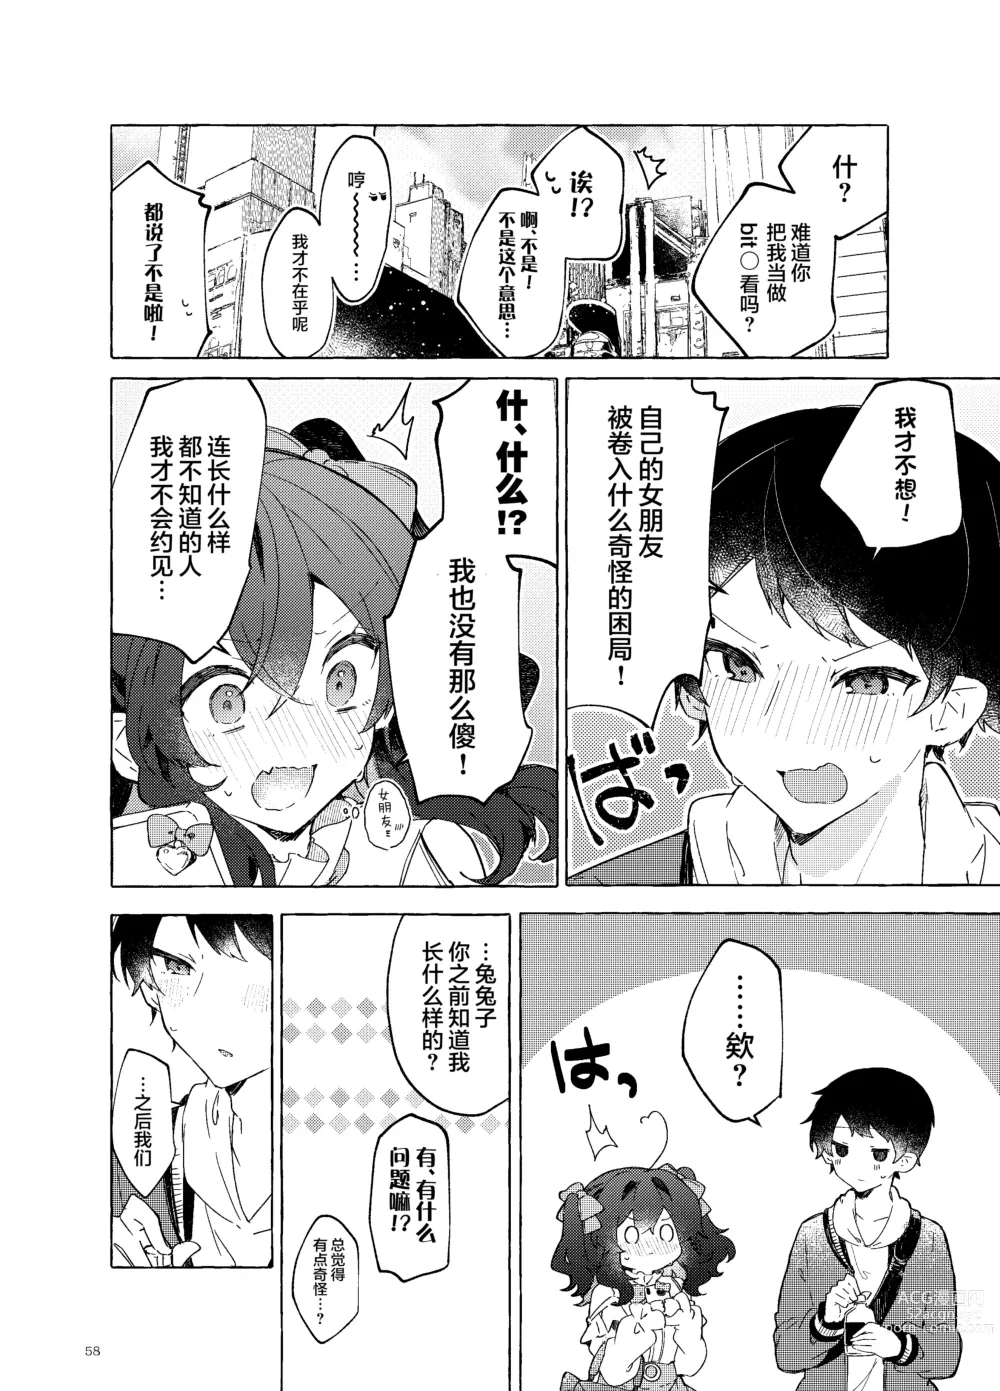 Page 60 of doujinshi Koi to Mahou to Etcetera - Love, Magic, and etc.